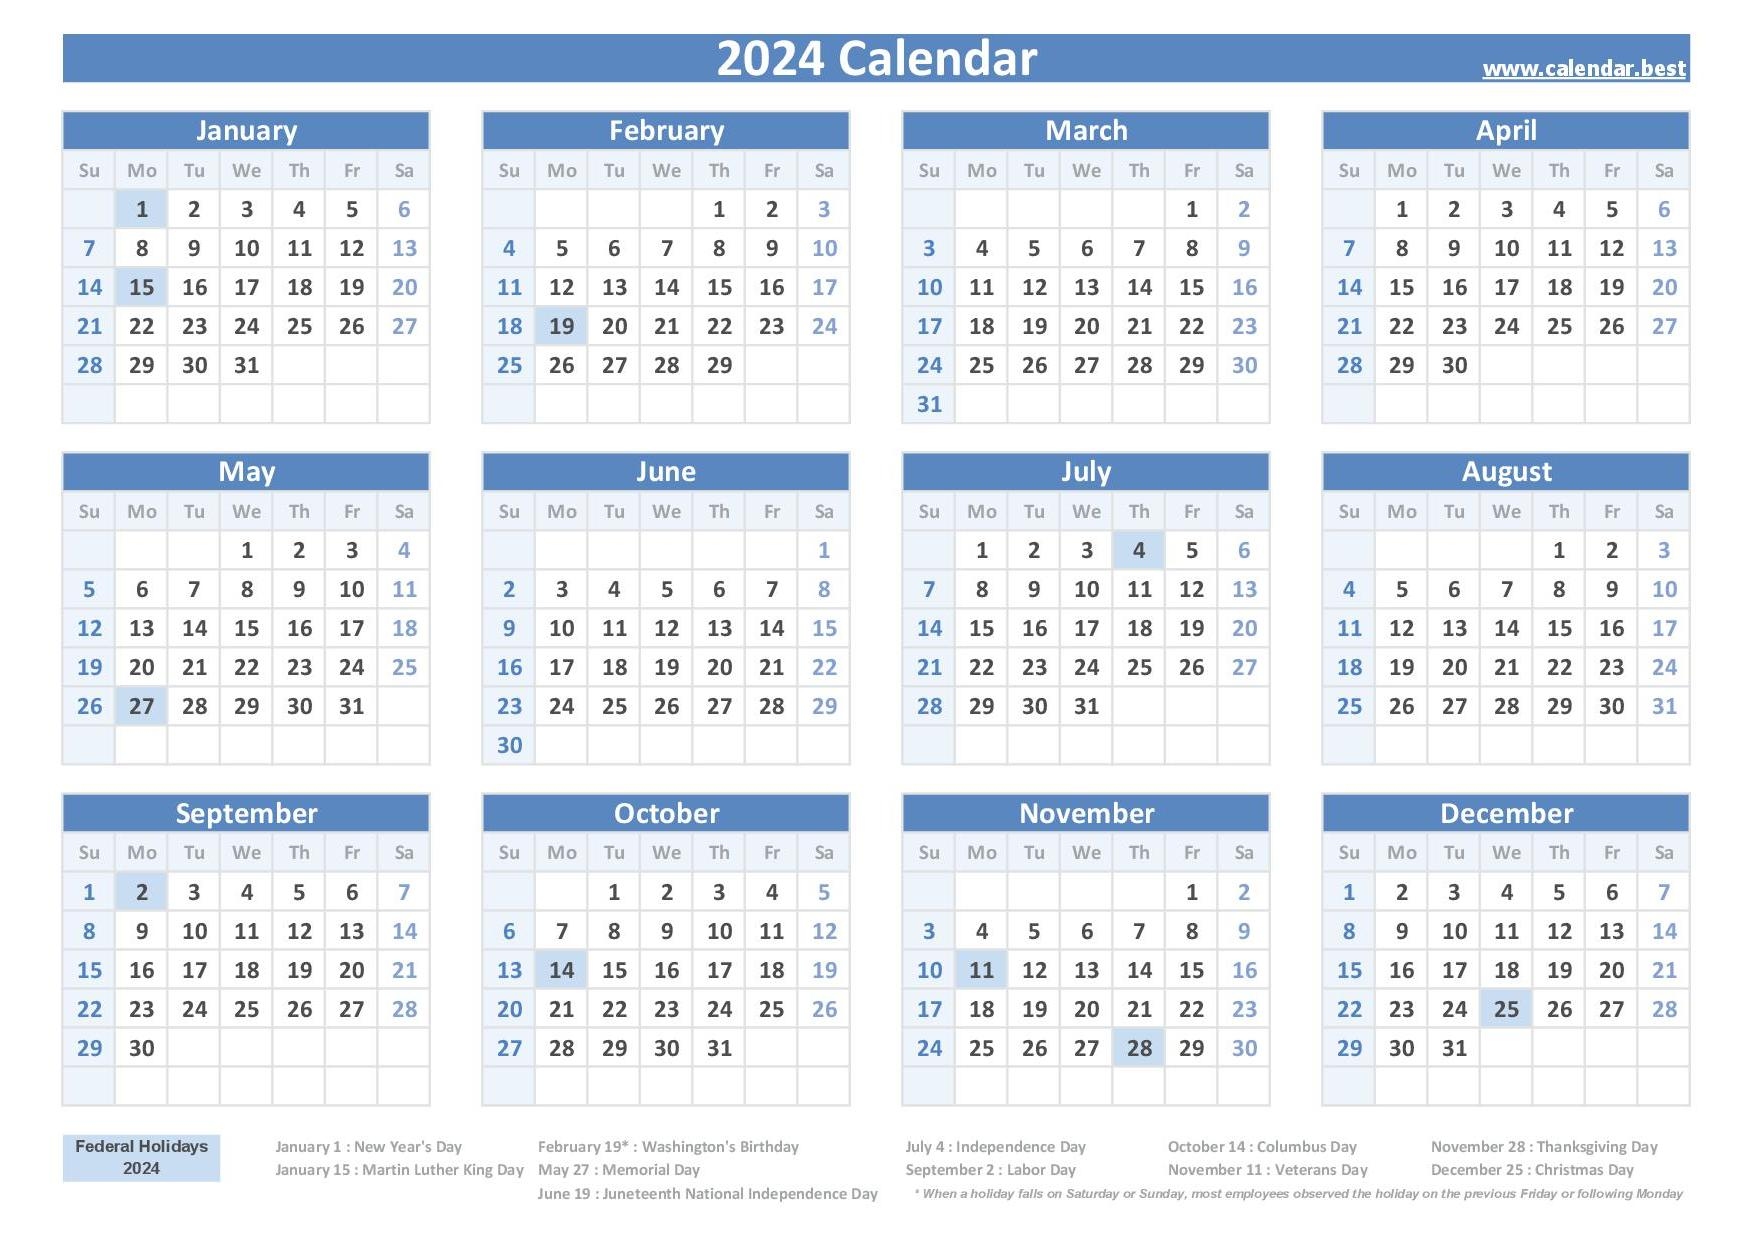 2024 Us Federal Holiday Calendar Printable Bill Marjie - Free Printable 2024 Calendar With Holidays Monthly